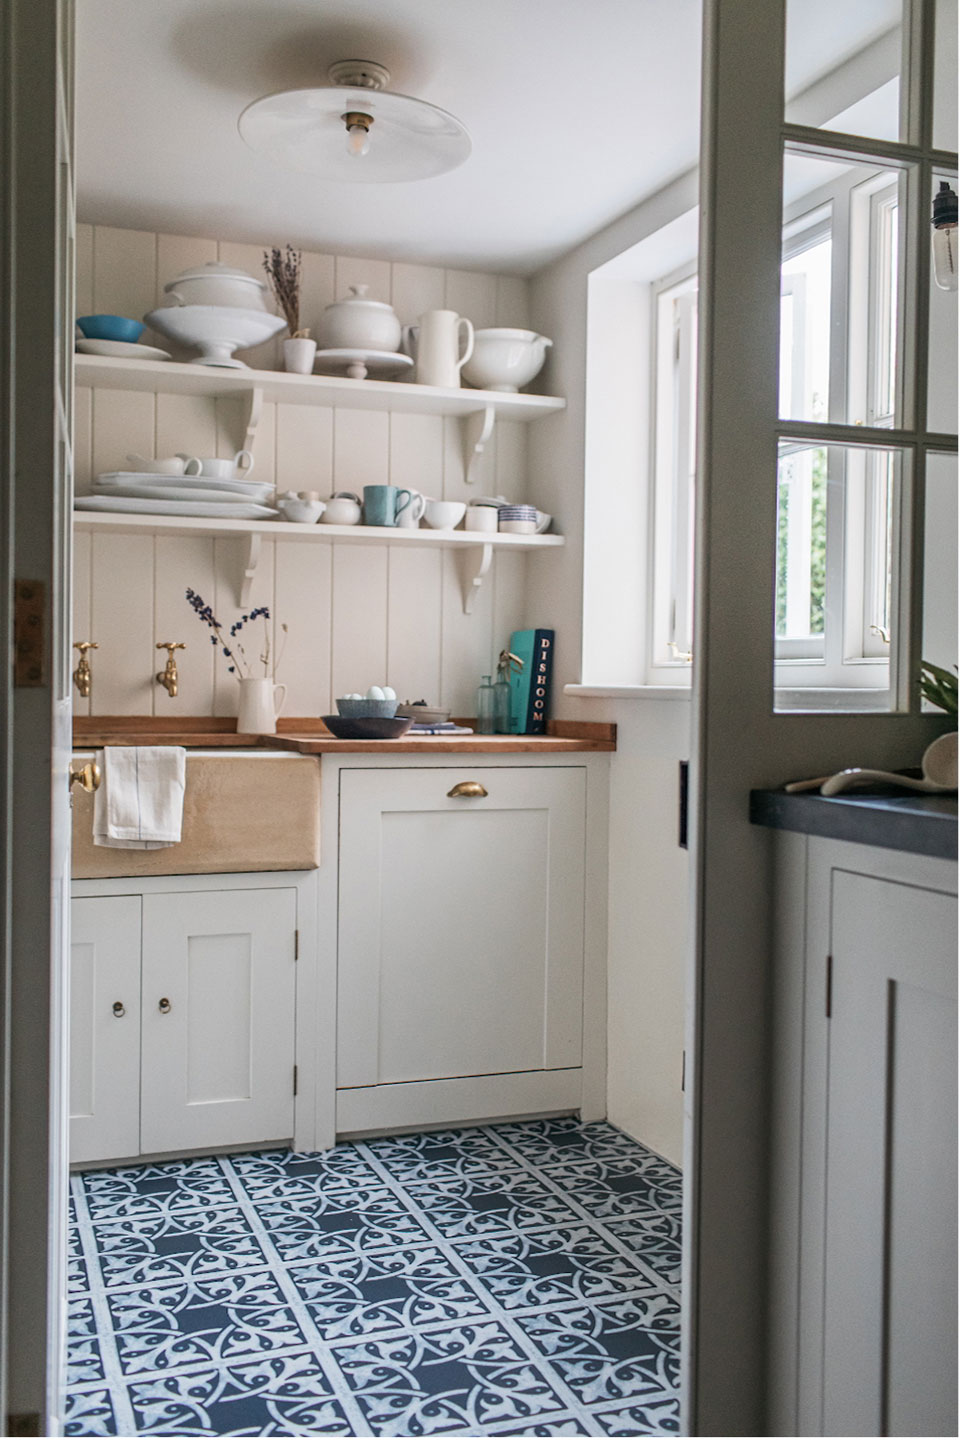 Authentic-kitchen-flooring-rustic-pantry-blue-deep-northmore-waterhouse-harvey-maria